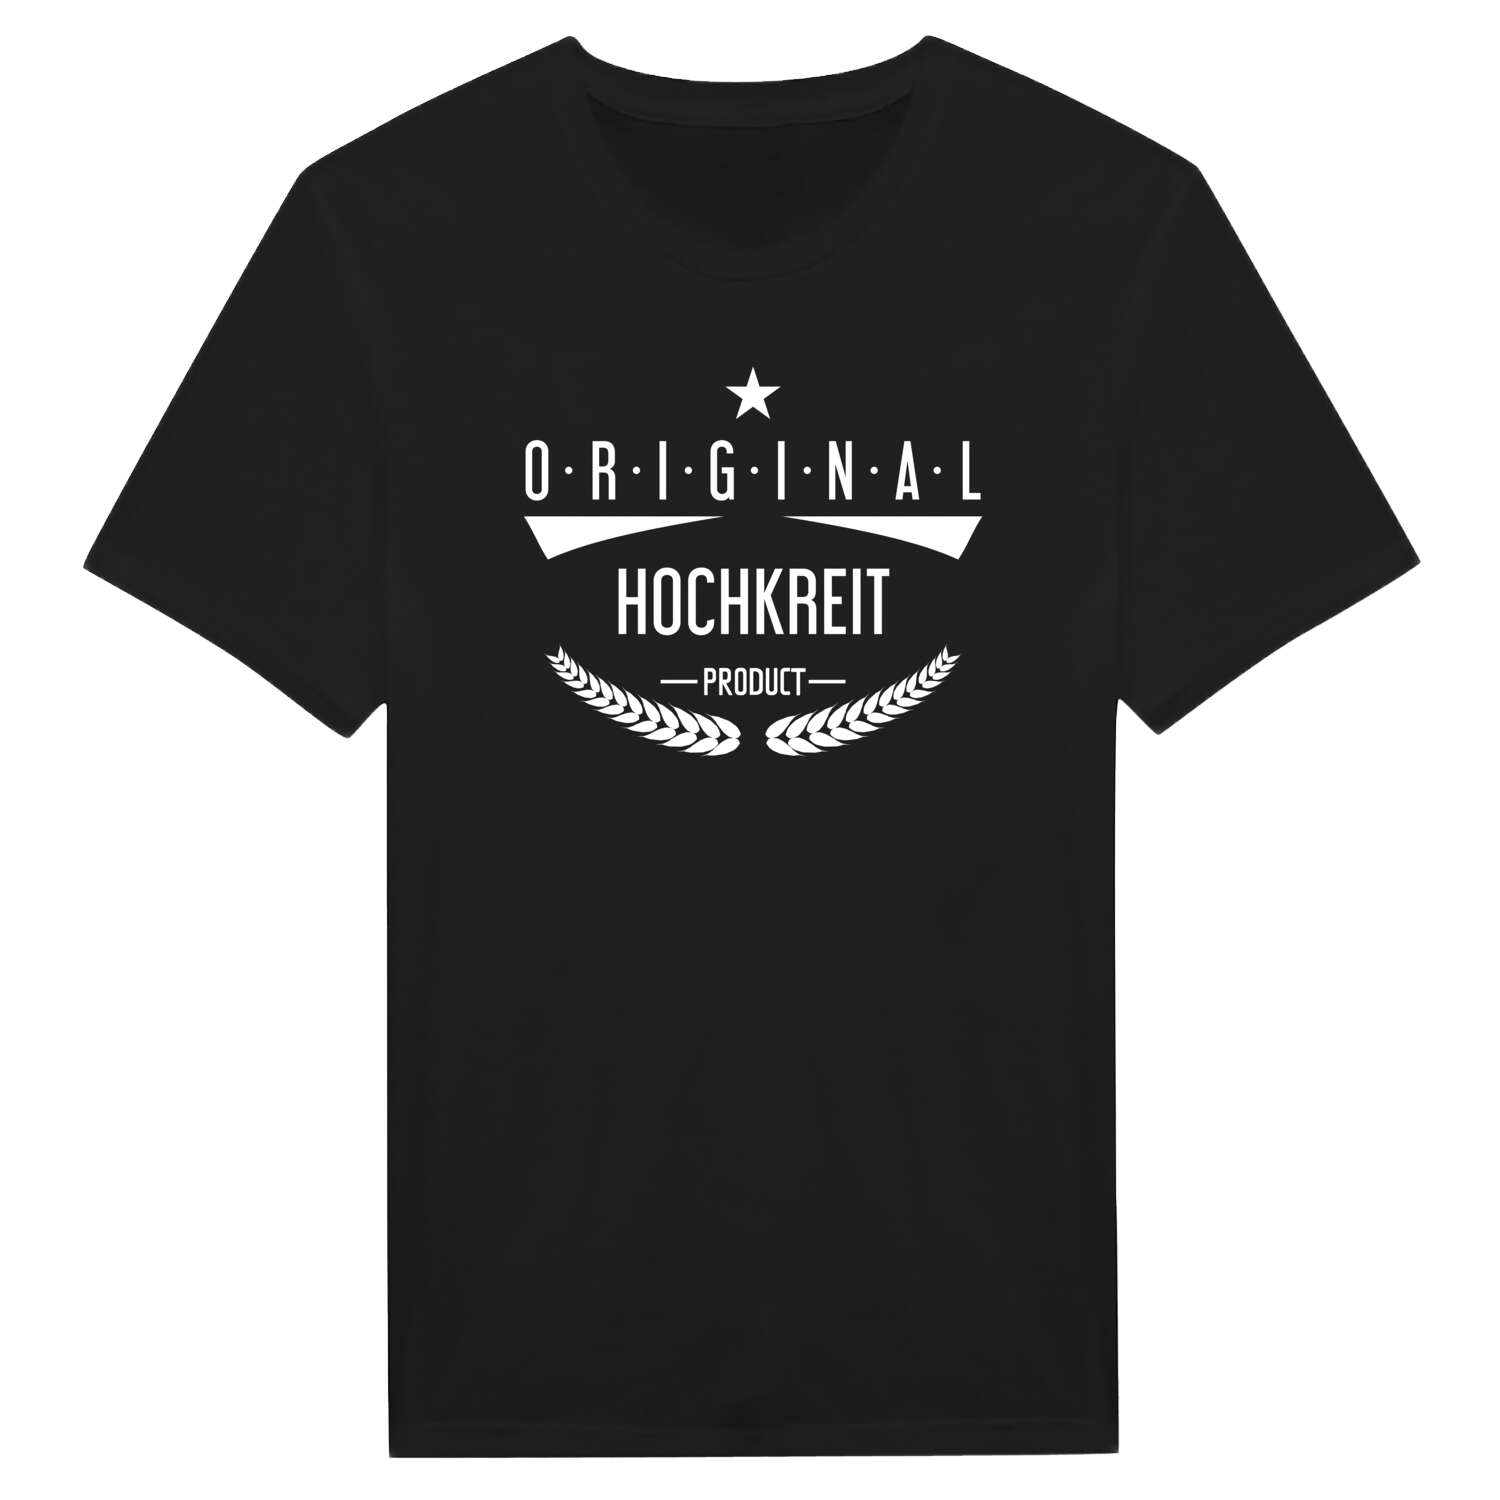 Hochkreit T-Shirt »Original Product«